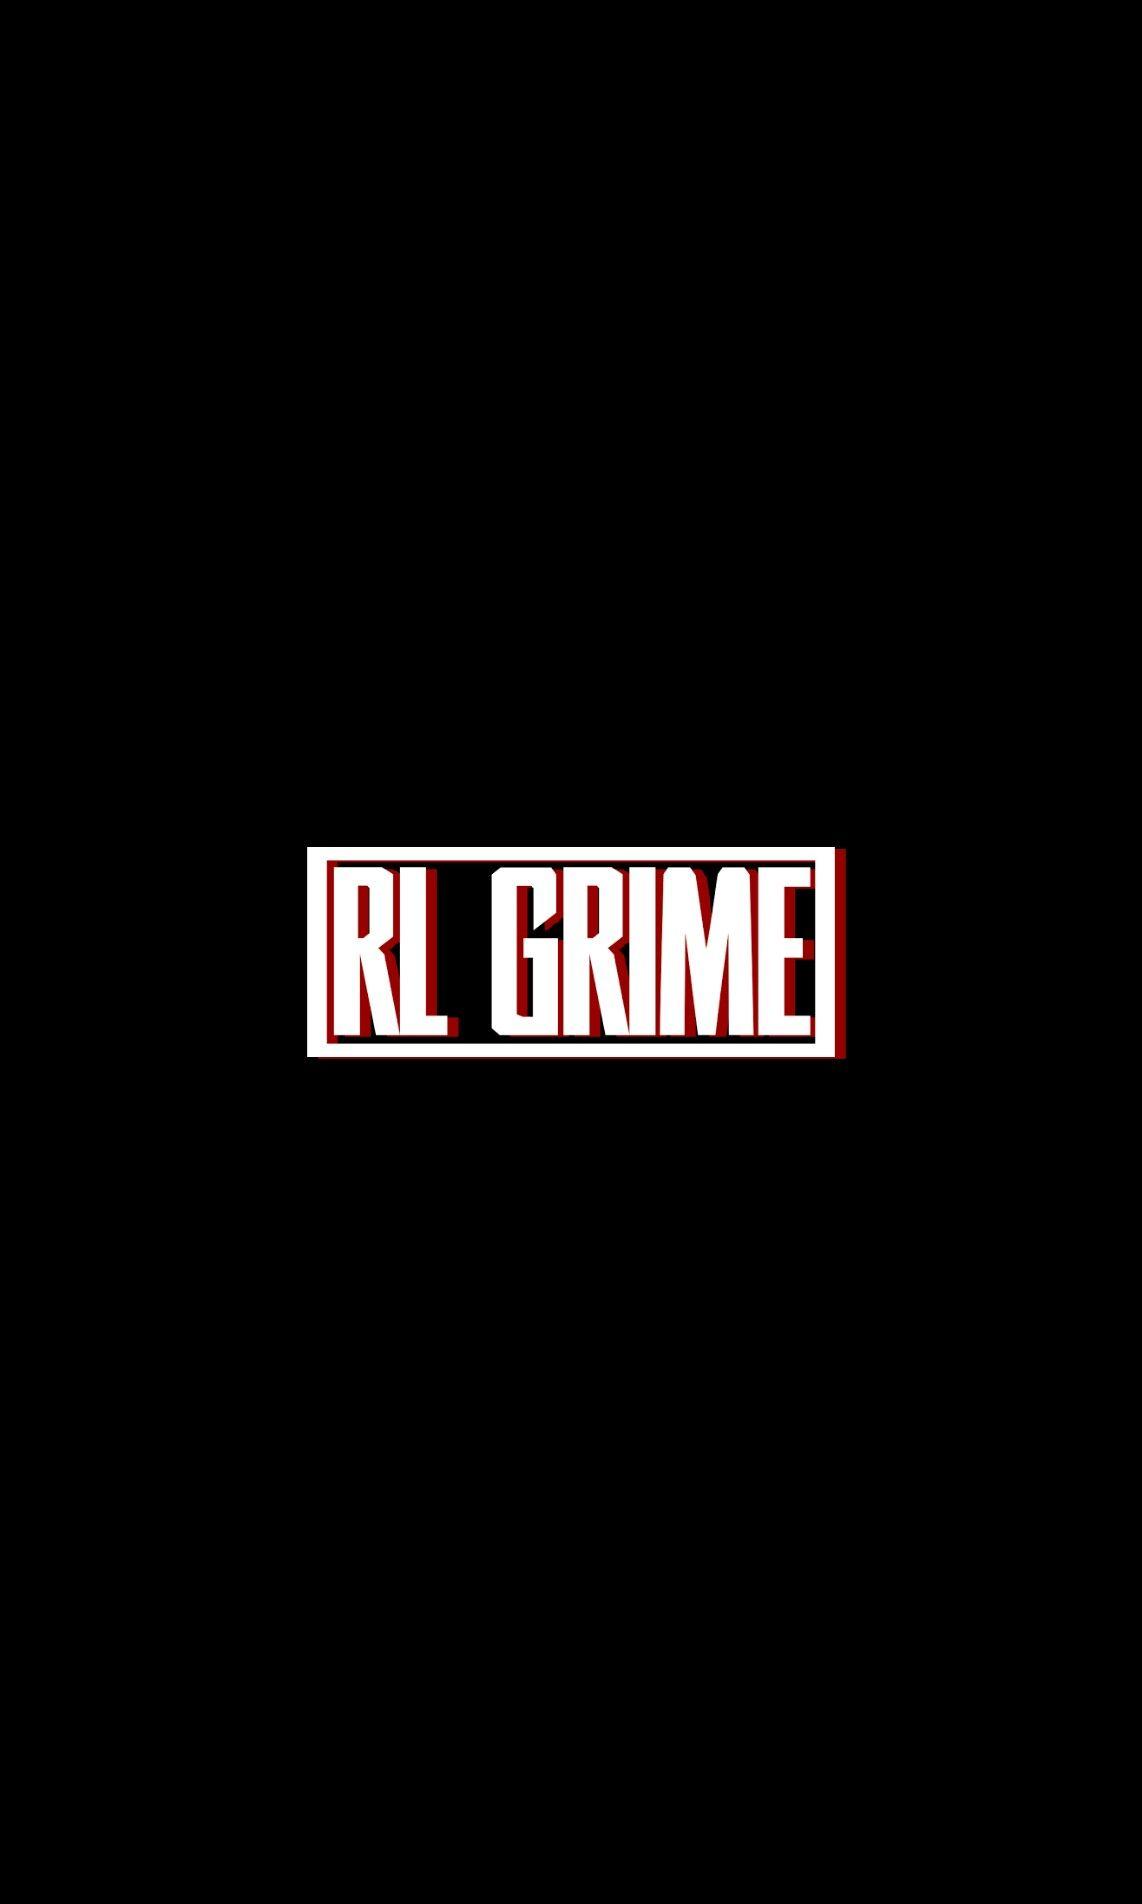 RL GRIME on Twitter for those asking we made official RL GrimeVOID  themed wallpapers download here httptcoJOCiur8prT  httptcoZrdBY6t4sr  X